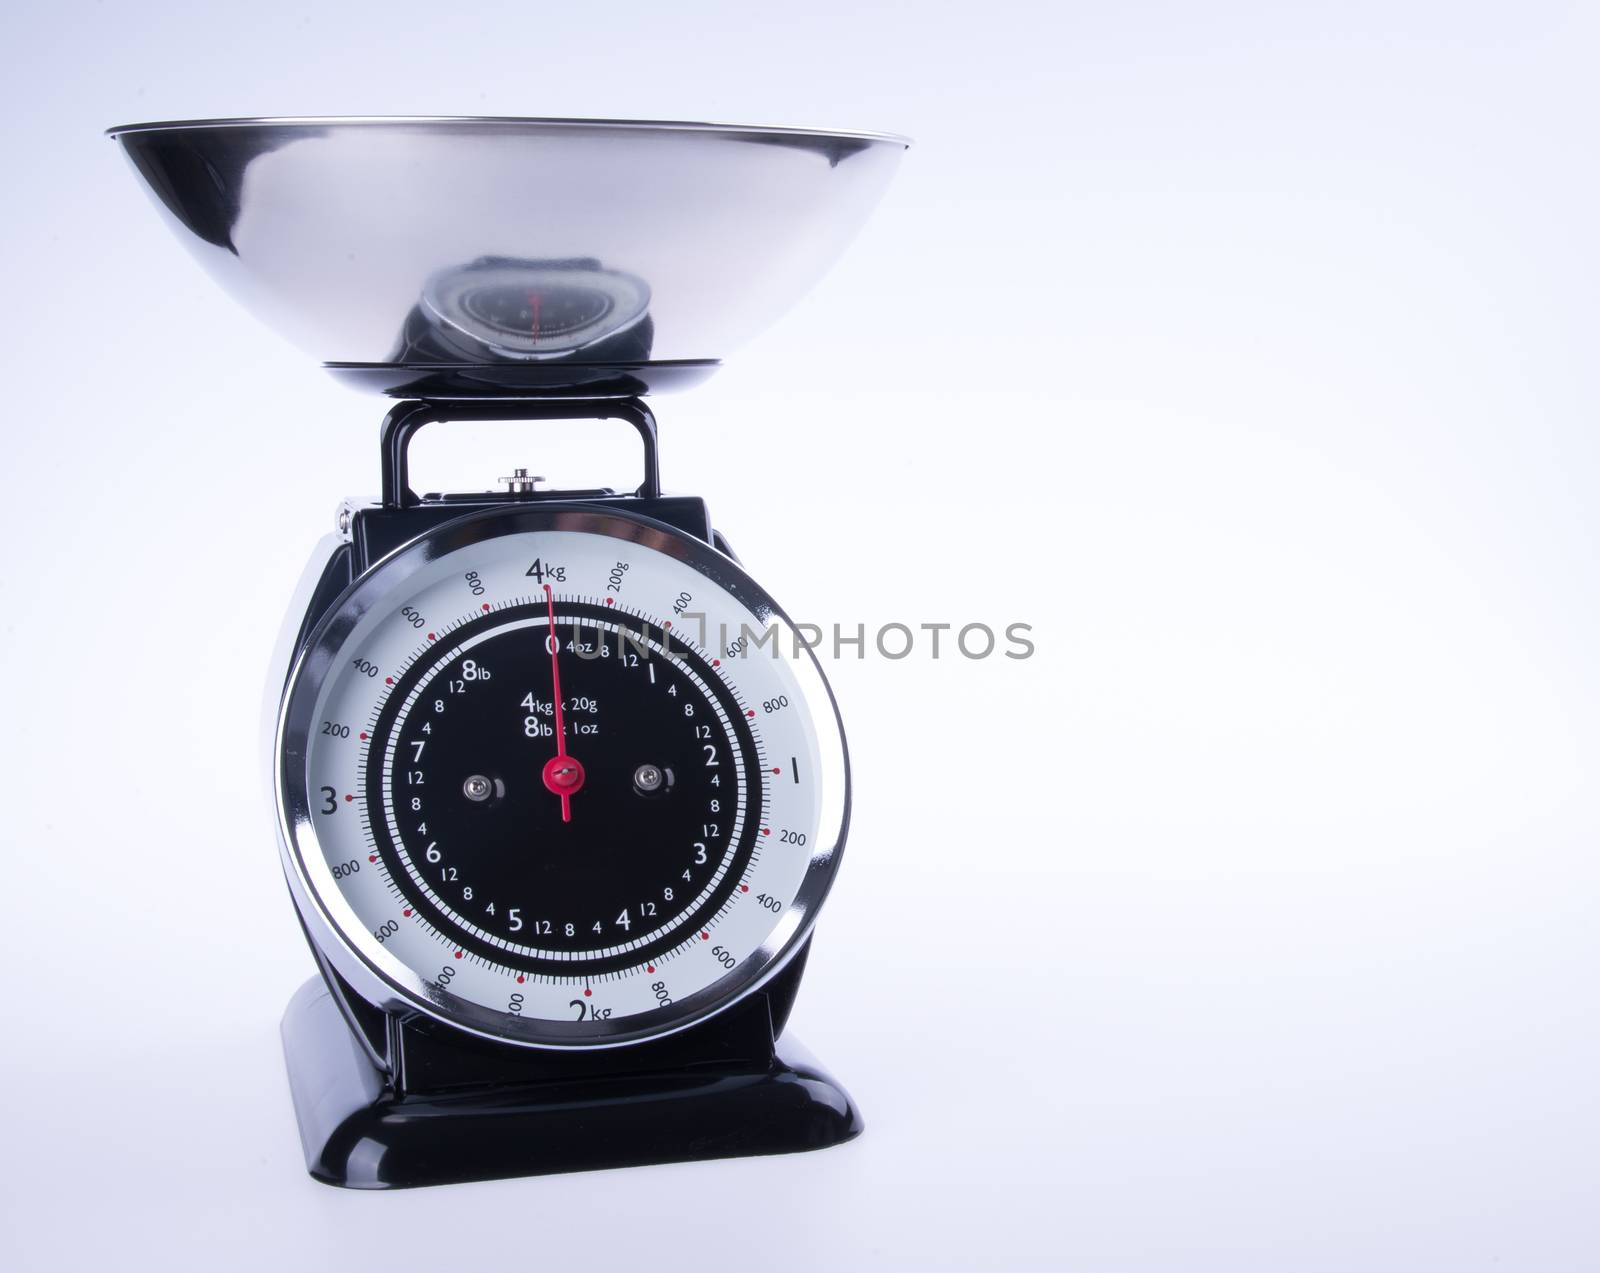 scales for kitchen or black kitchen scales. by heinteh